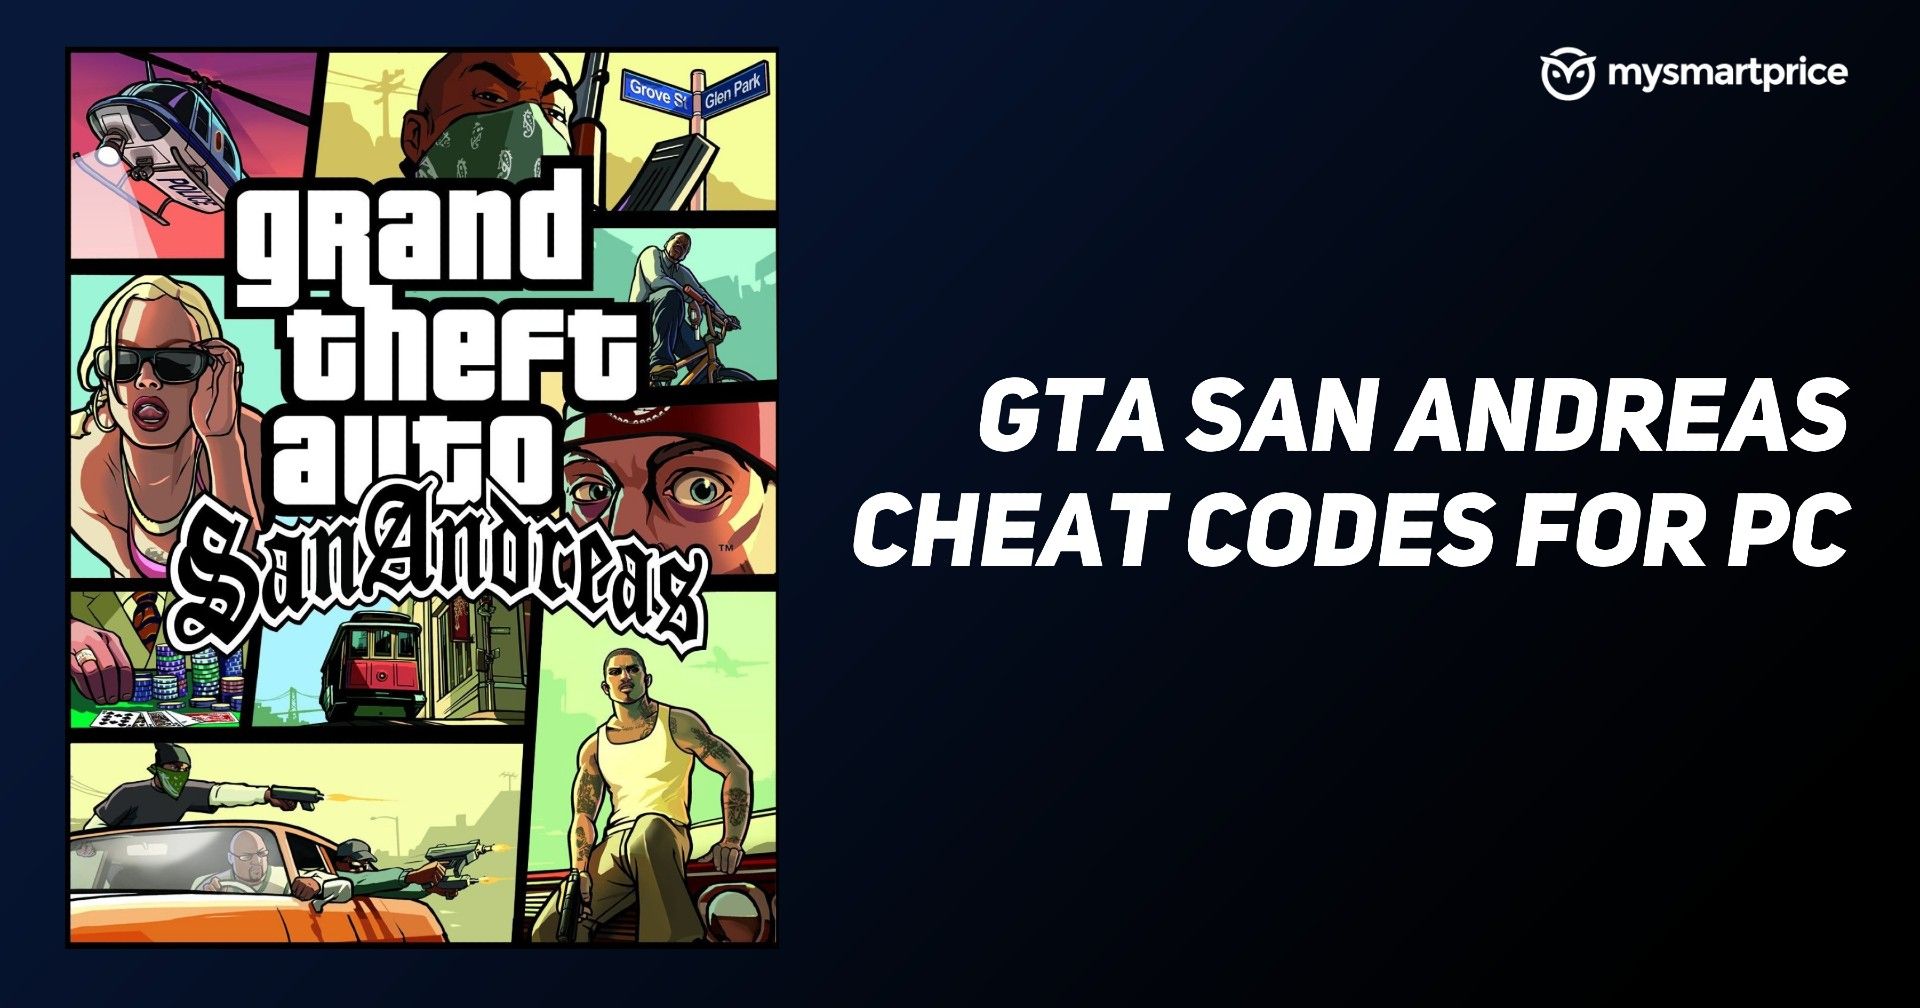 Gta San Andreas Cheats Full List Of All Gta San Andreas Game Cheat Codes For Pc